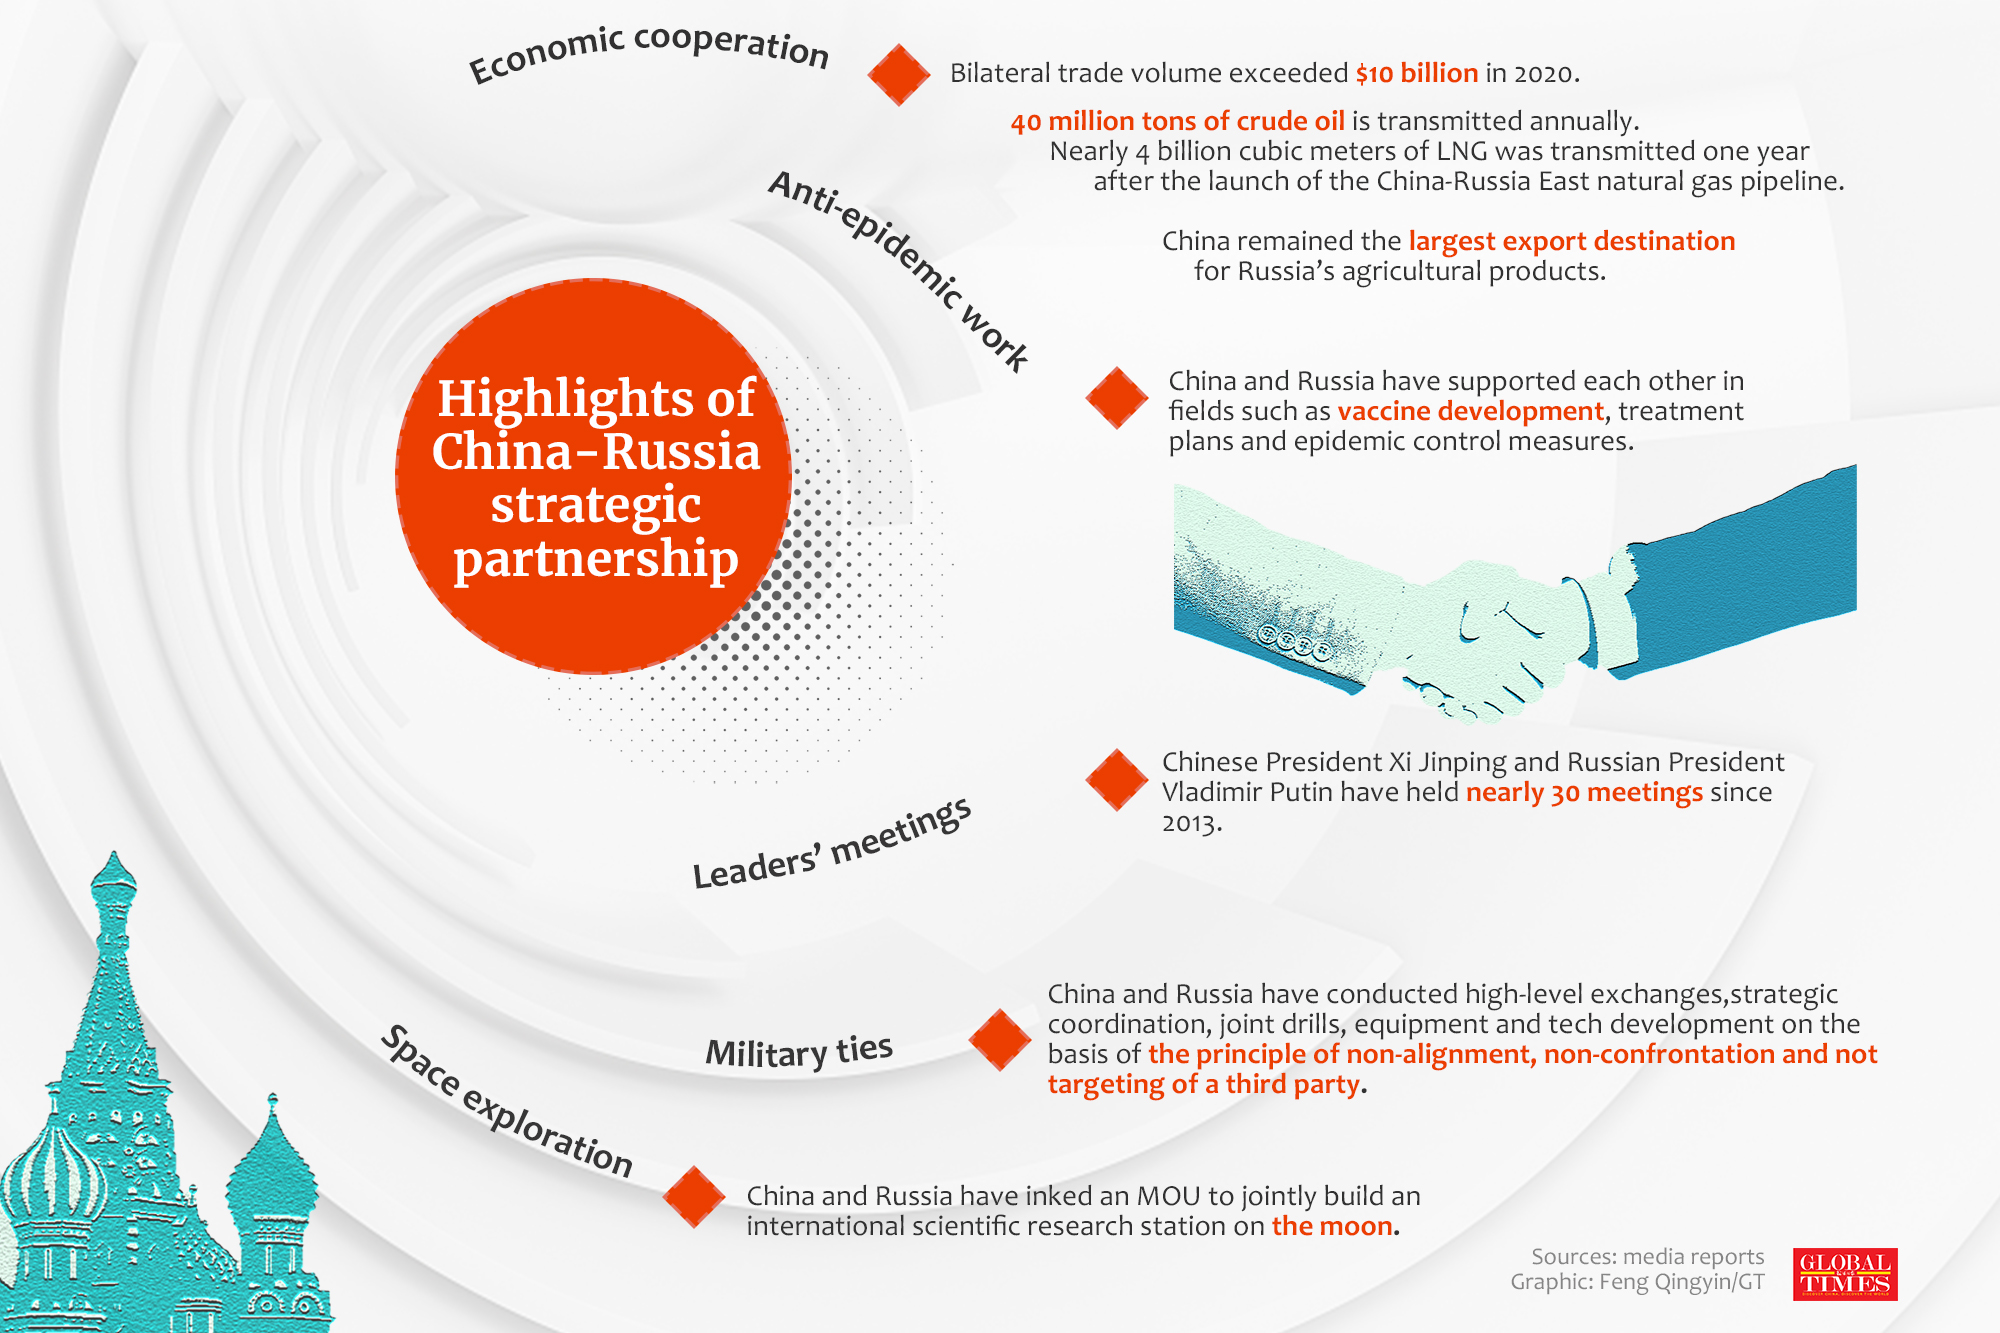 Highlights of China-Russia strategic partnership: